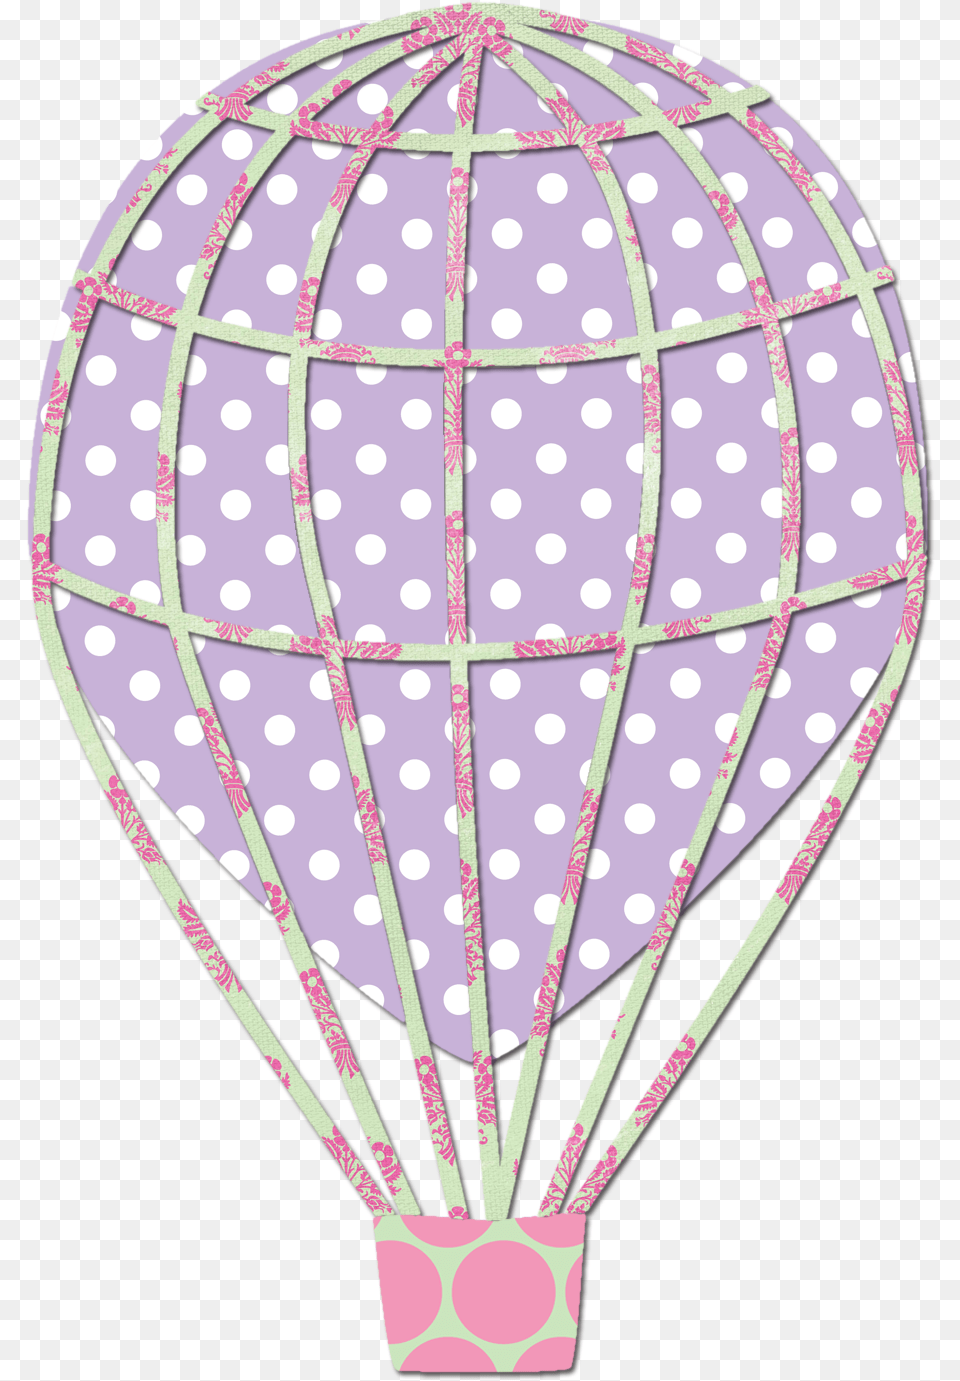 Hot Air Balloon Clip Art Embellishment Hot Air Balloon, Aircraft, Hot Air Balloon, Transportation, Vehicle Png